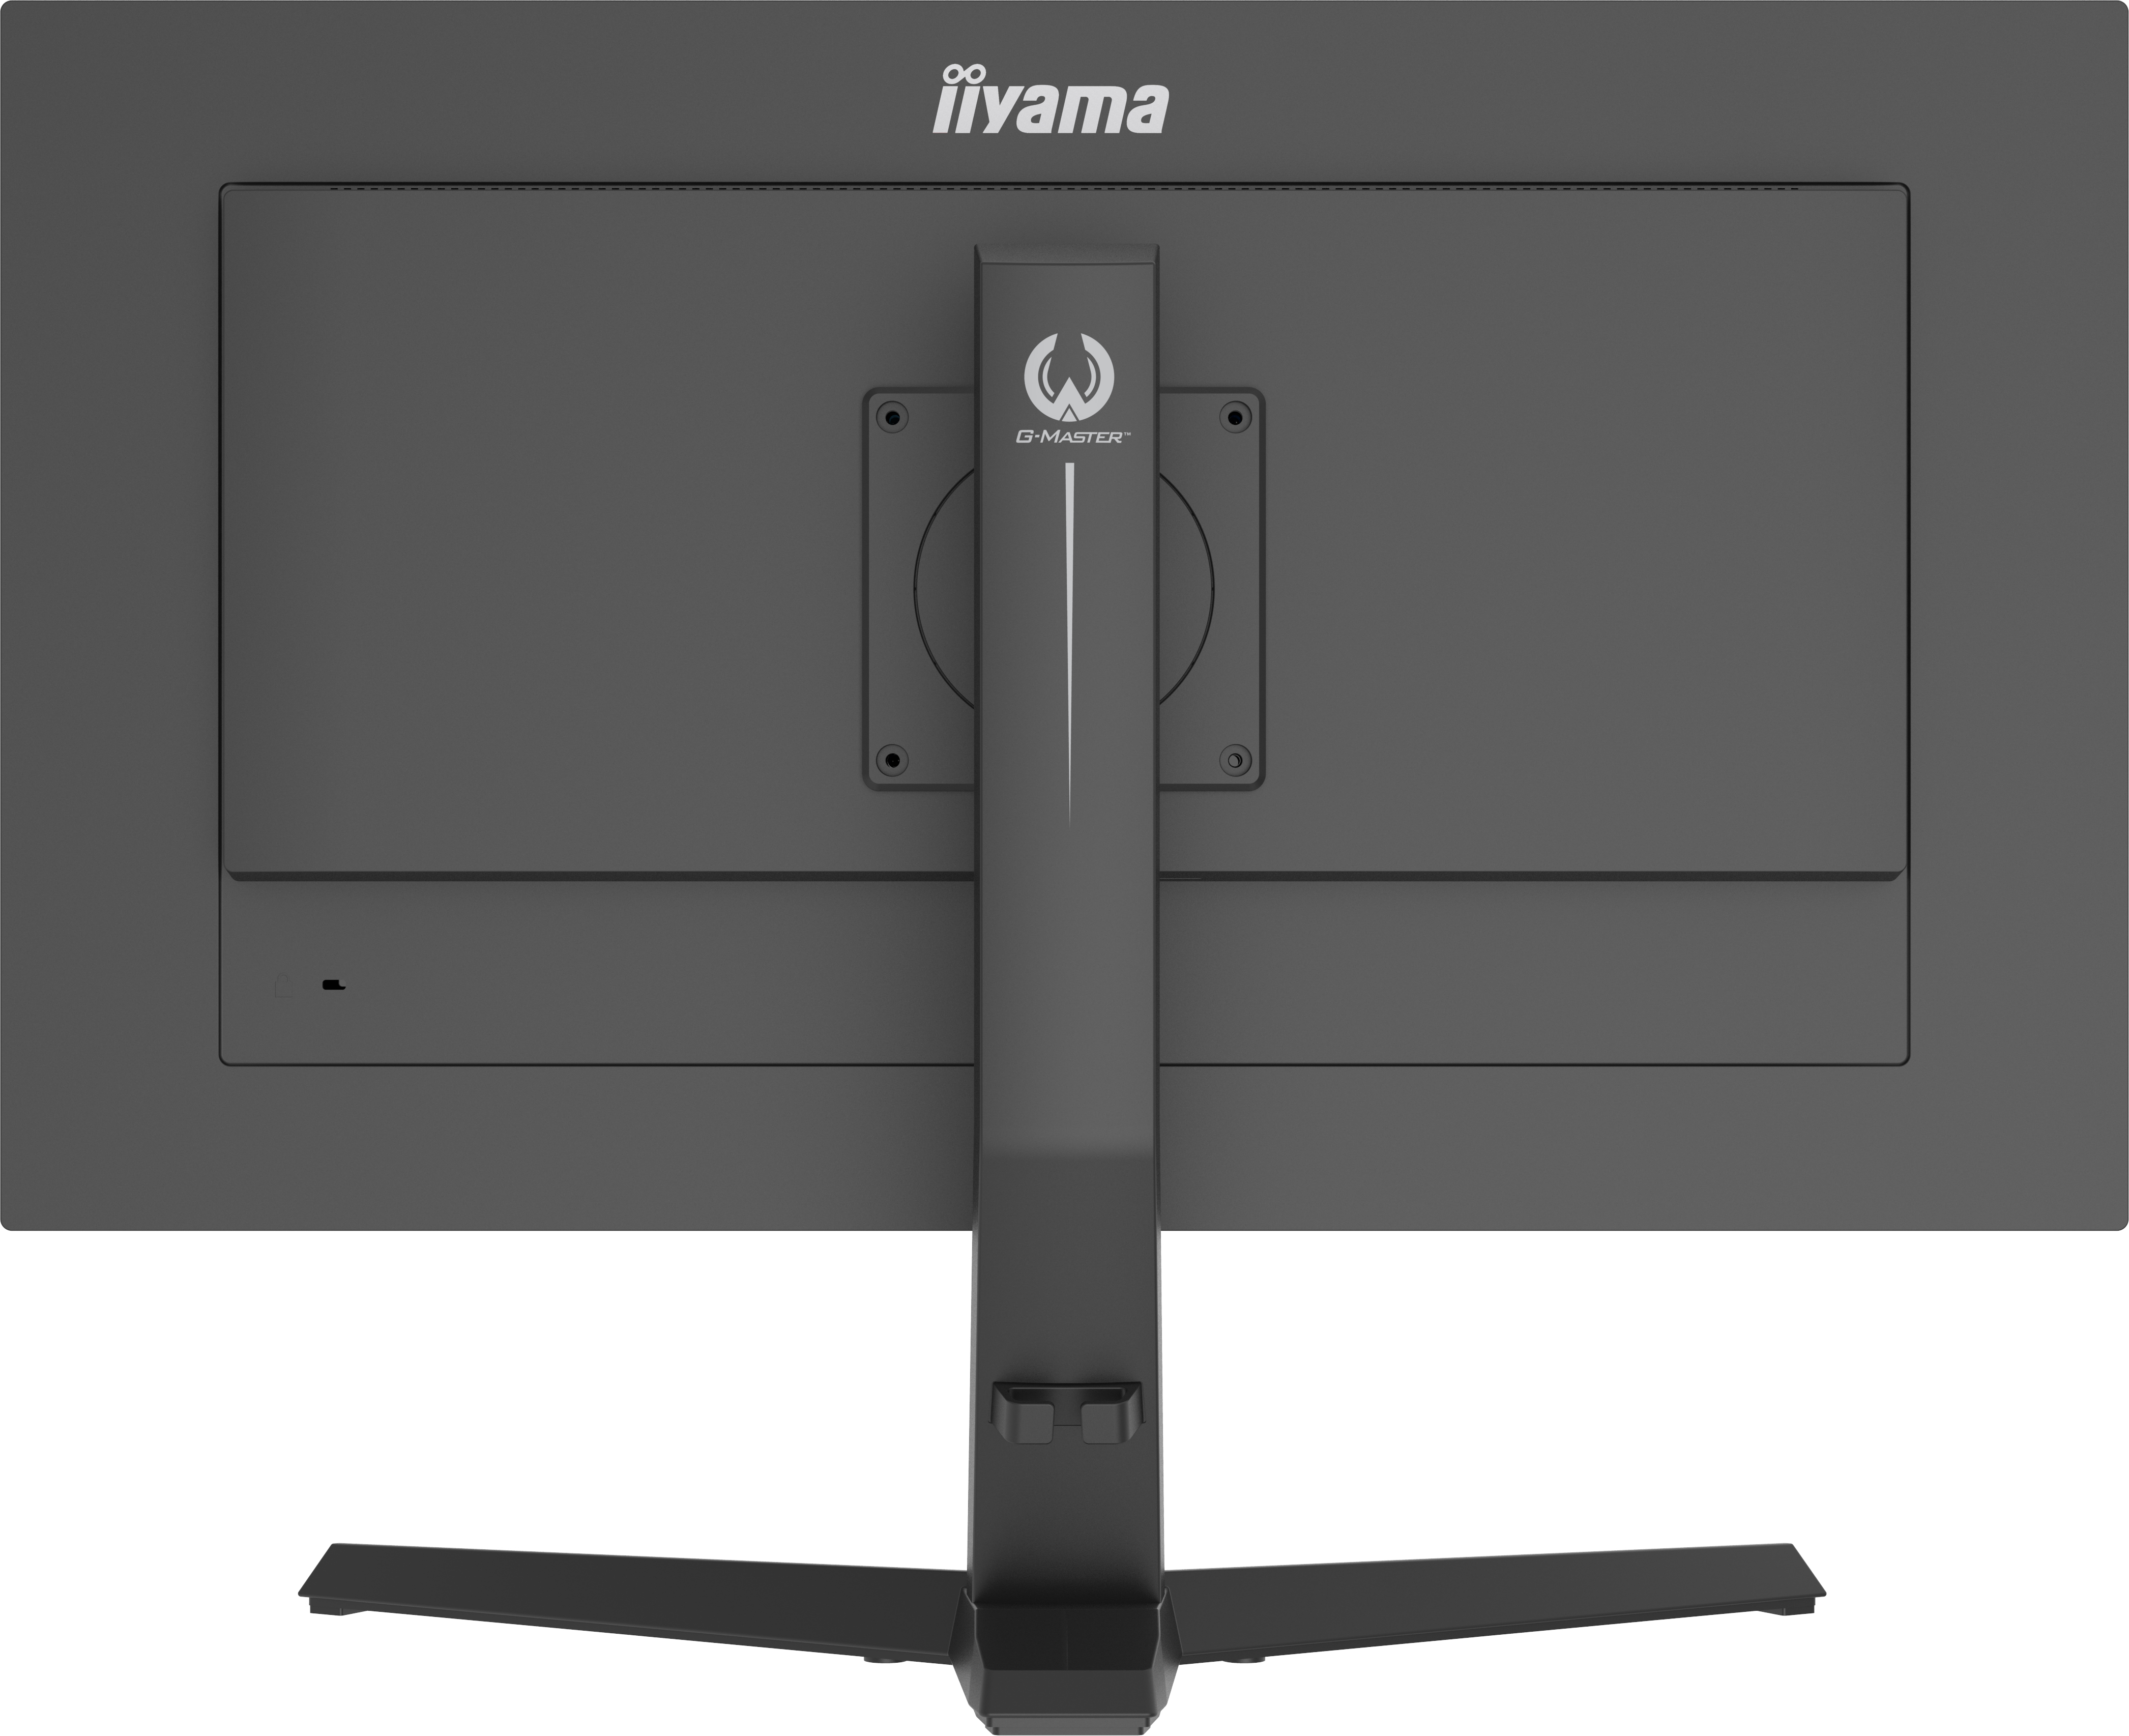 iiyama-g-master-gb2870uhsu-b1-computer-monitor-13401406-36674164